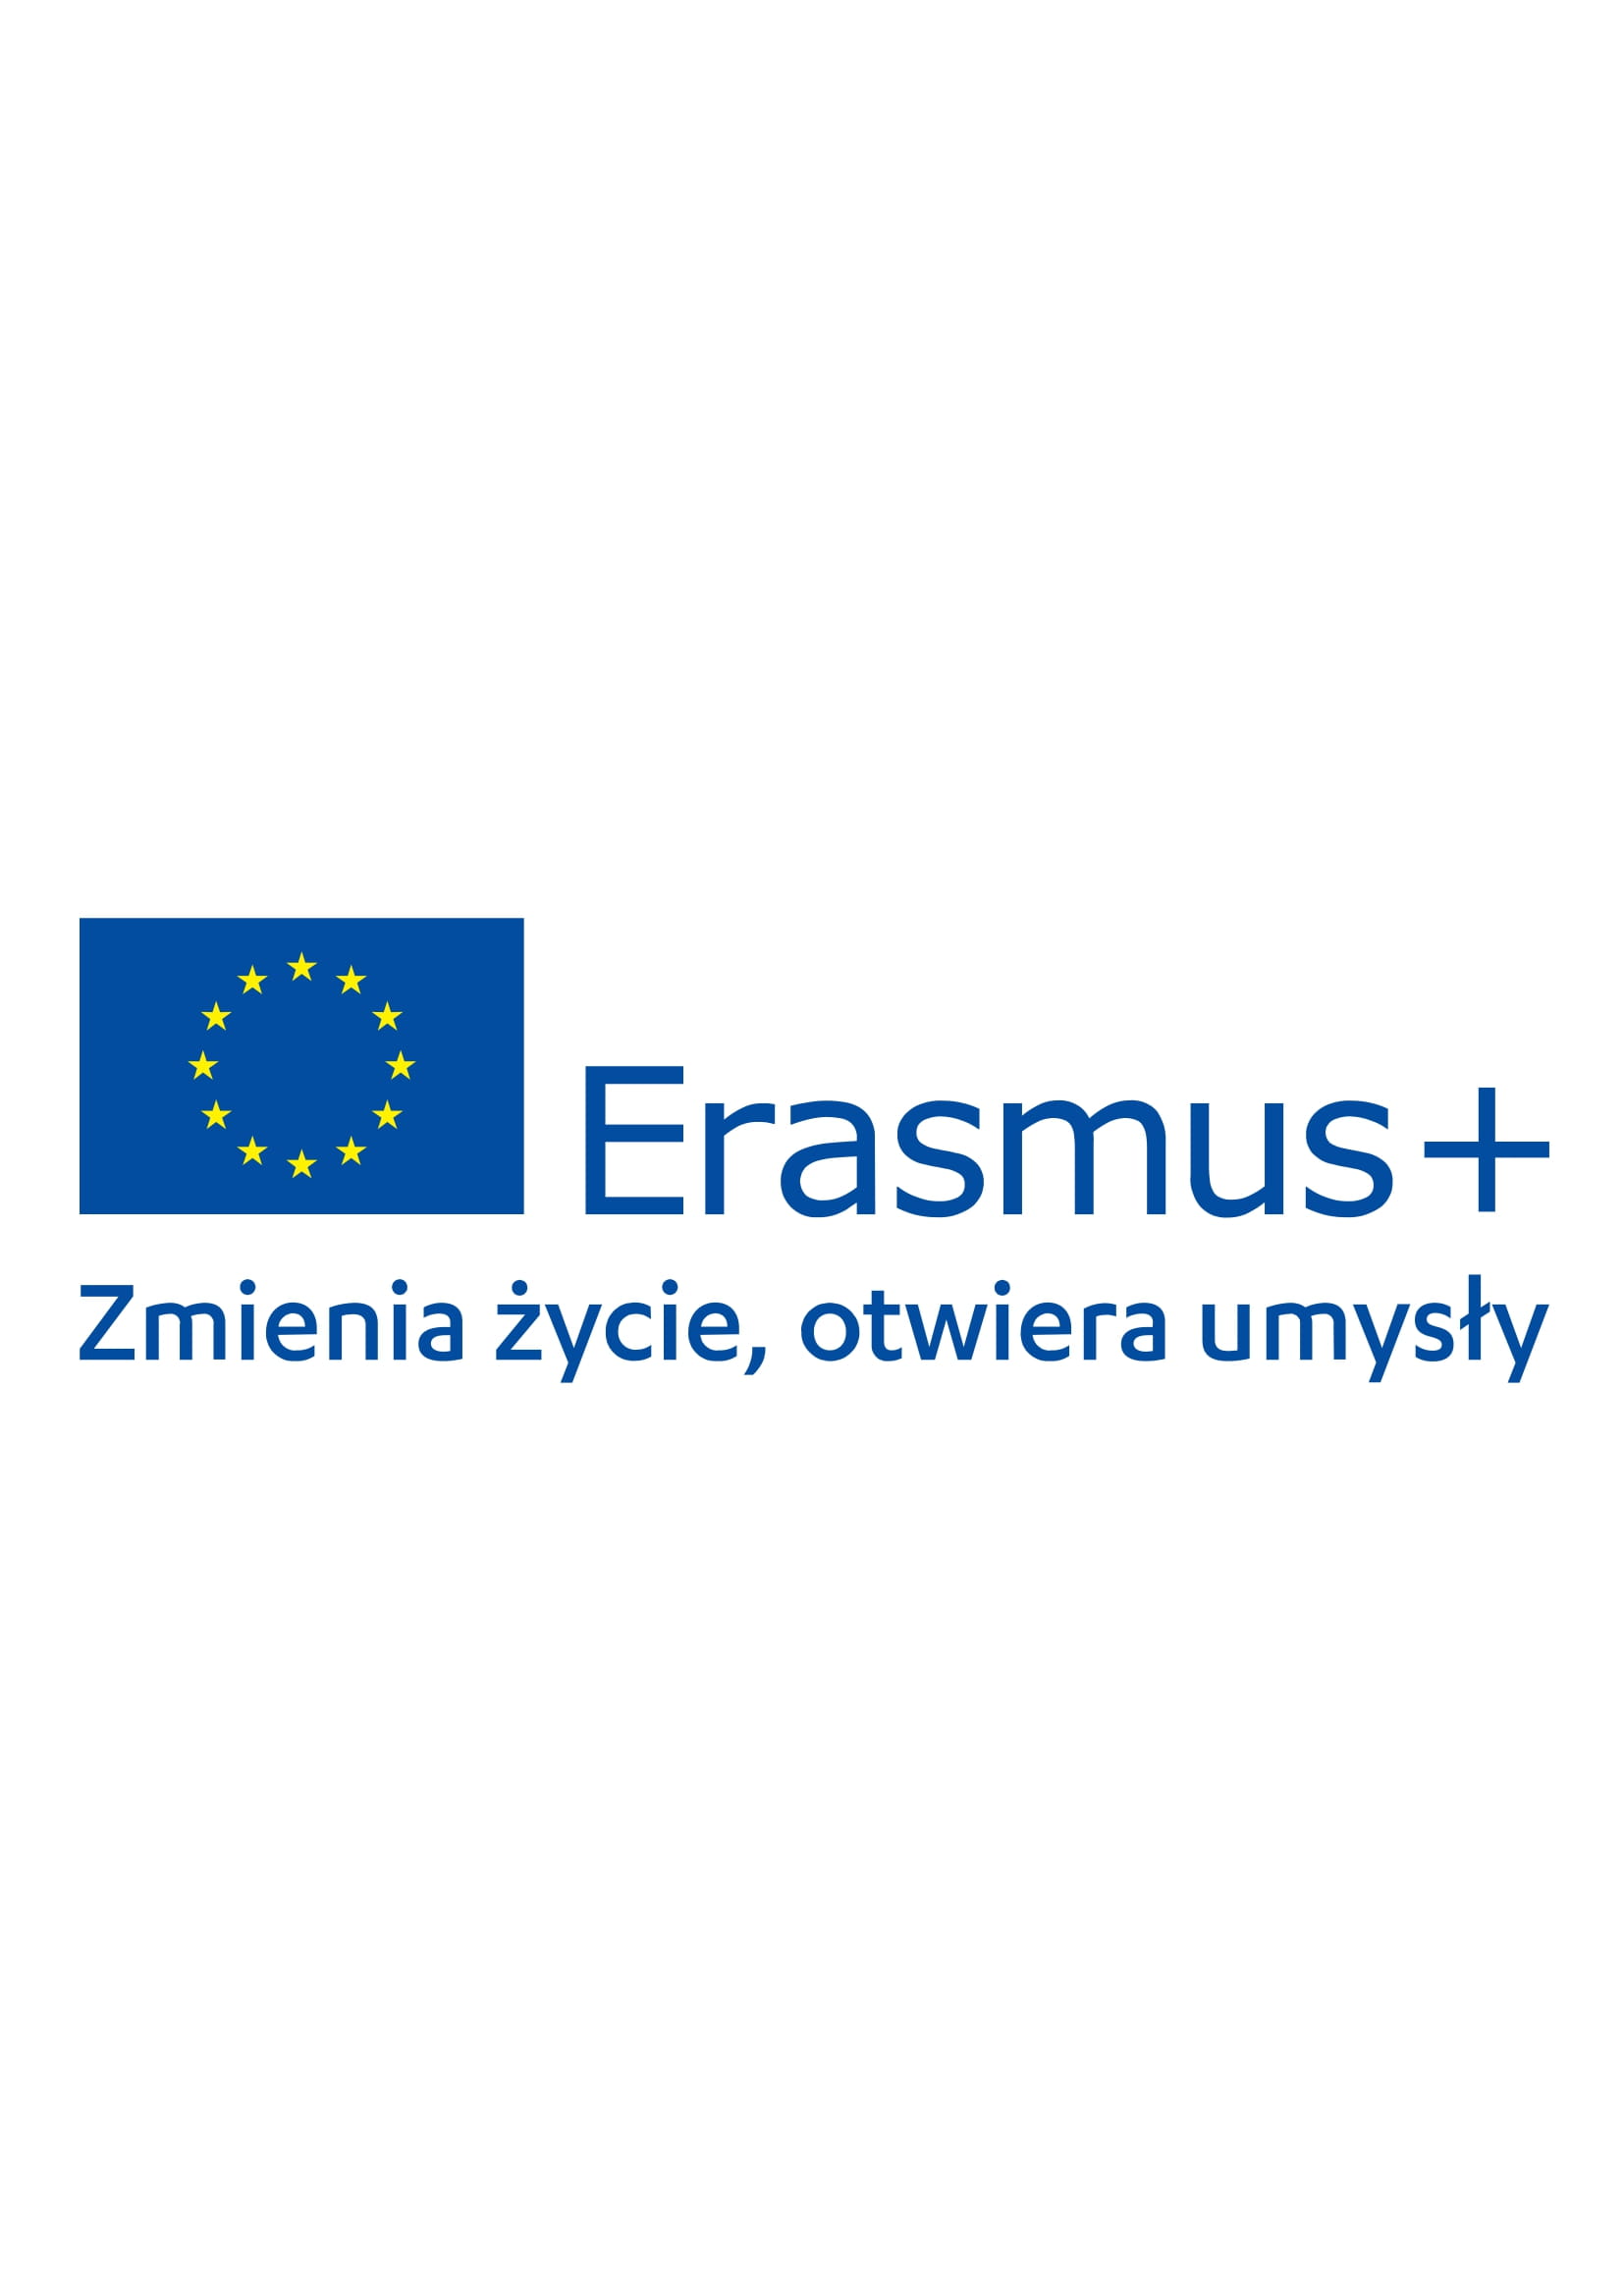 logo erasmus-1